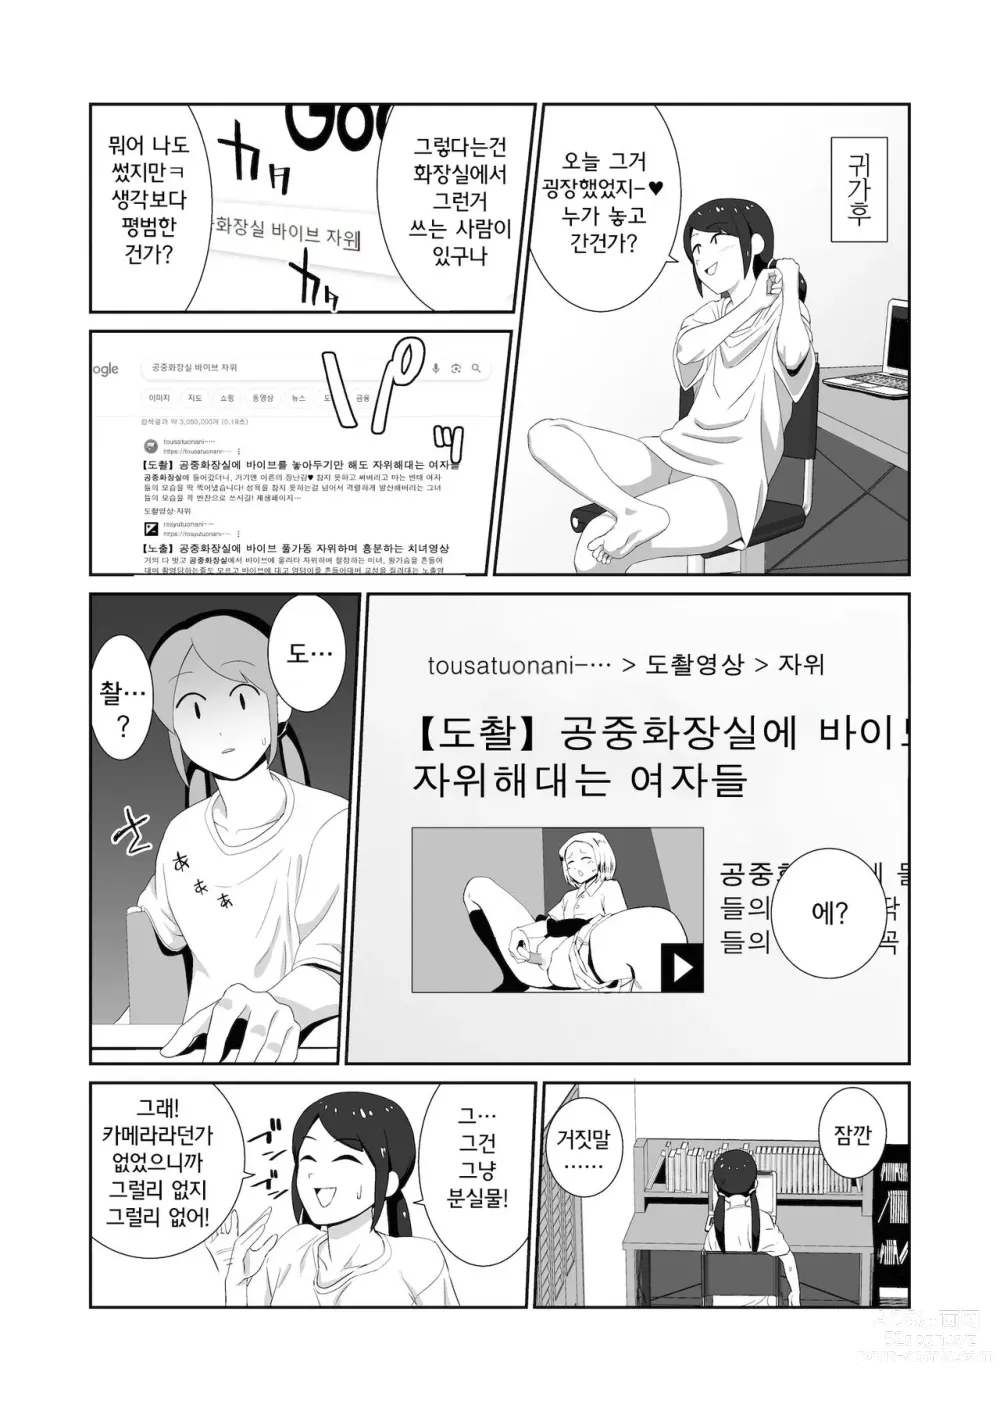 Page 3 of manga 공중화장실에서 도촬당하며 자위하는것에 빠져버린 여자